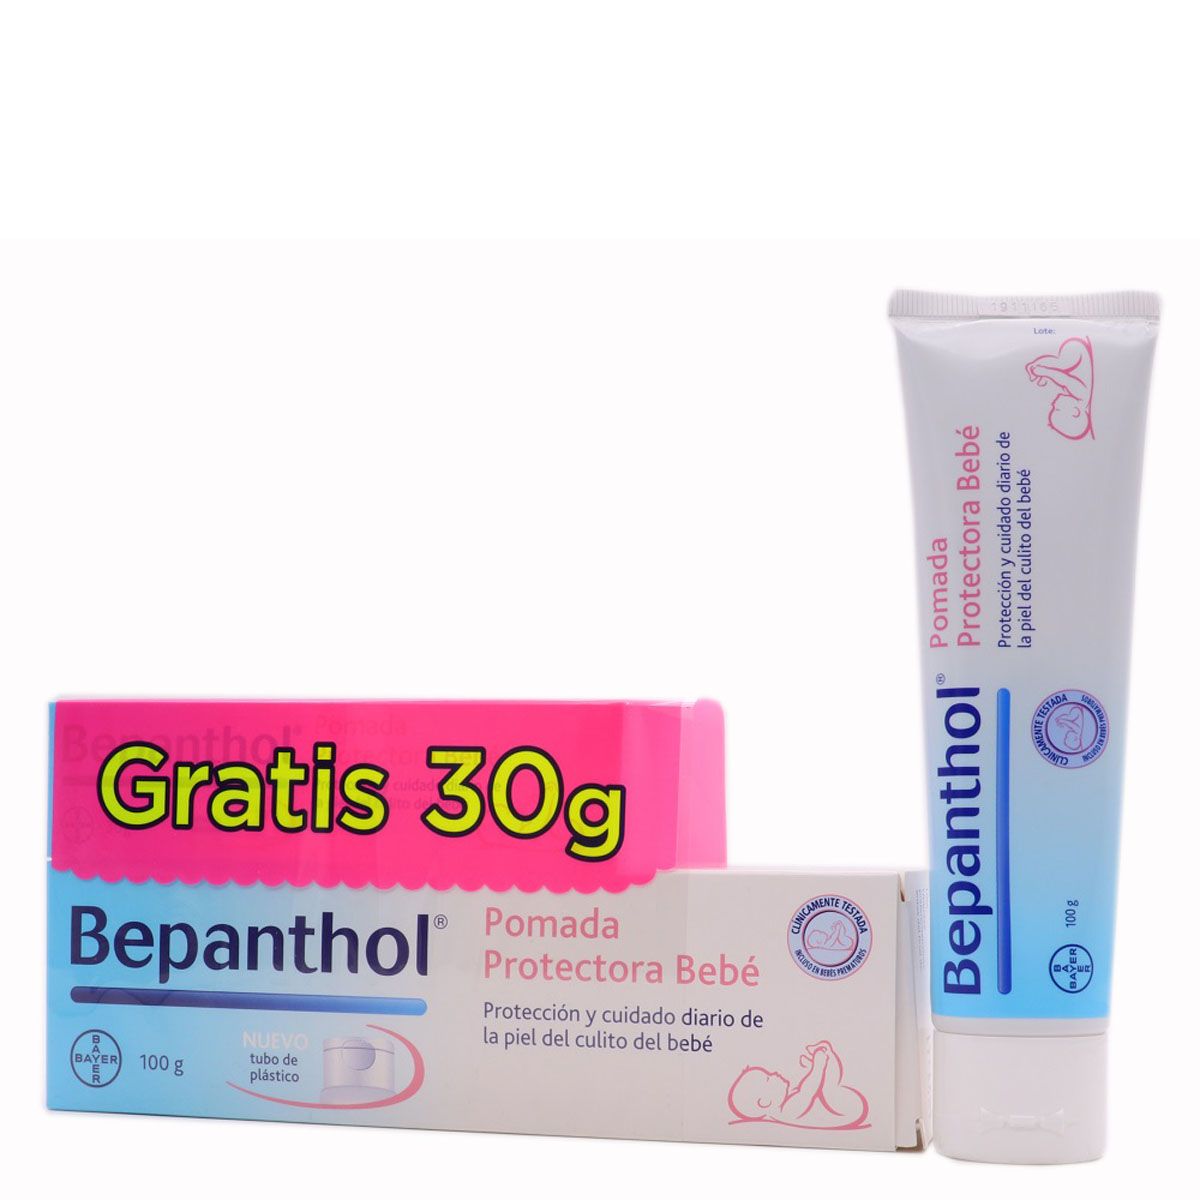 Bepanthol 330669 - Bepanthol pomada protectora bebe 100 g + 30 g de regalo,  unisex